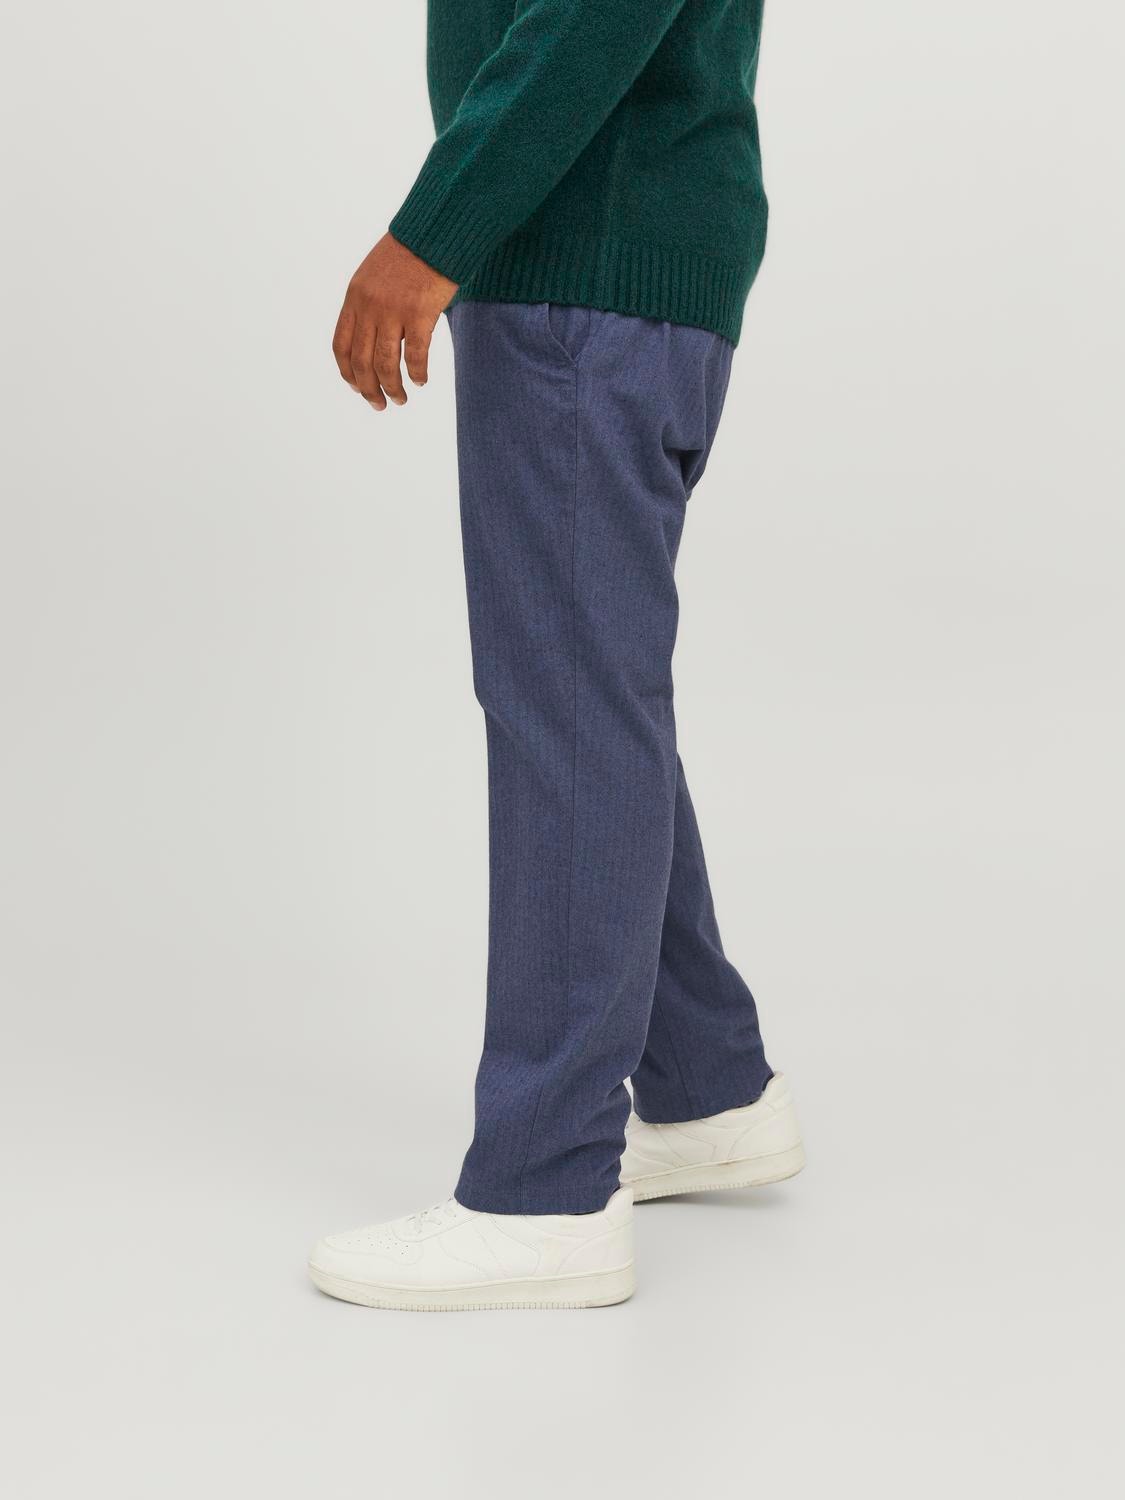 Jack & Jones Plus Size Calças Chino Slim Fit -Navy Blazer - 12245650